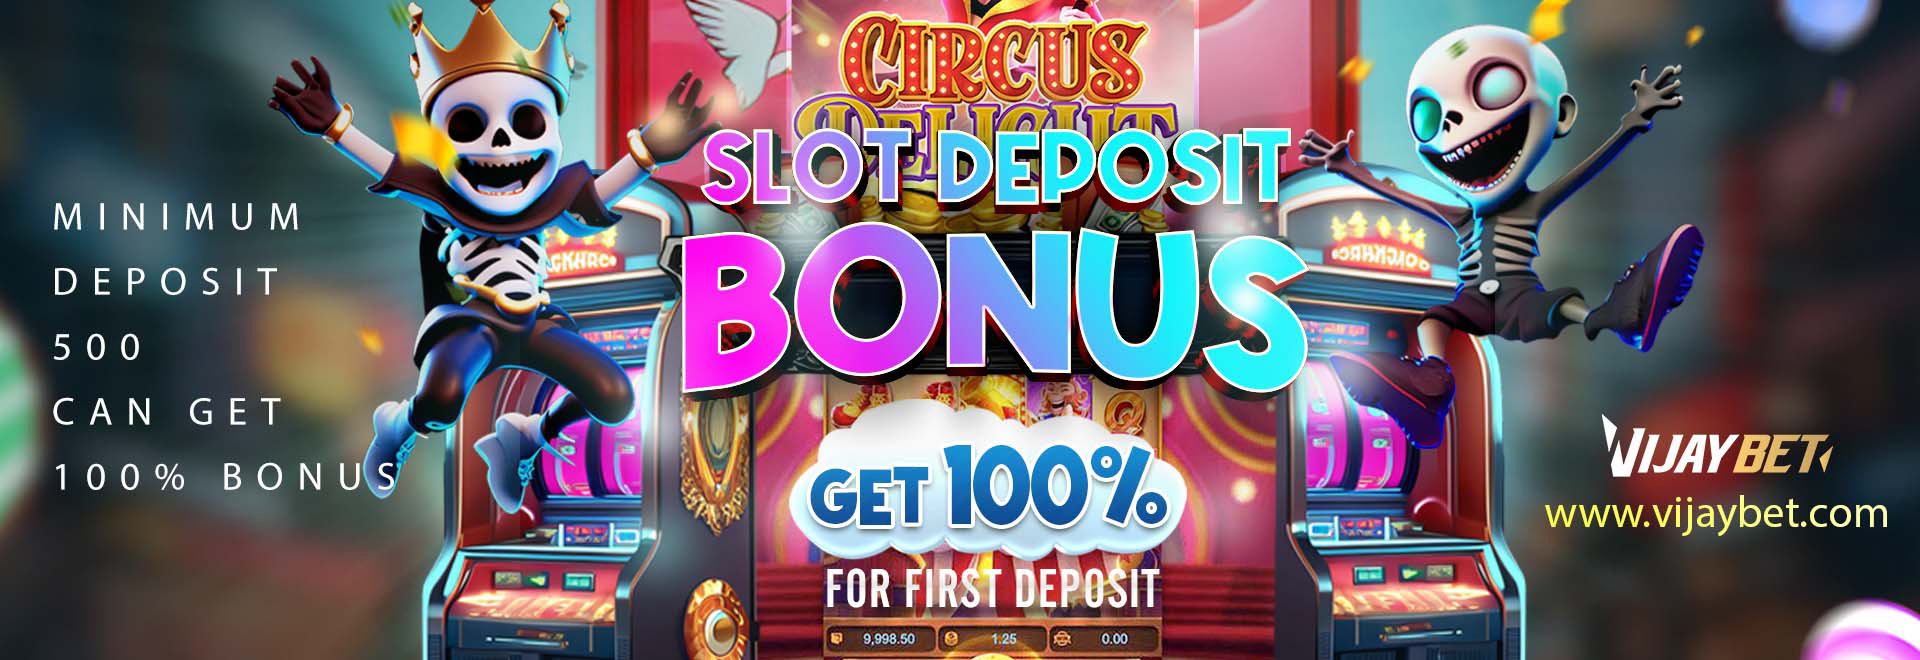 Slot Deposit Bonus